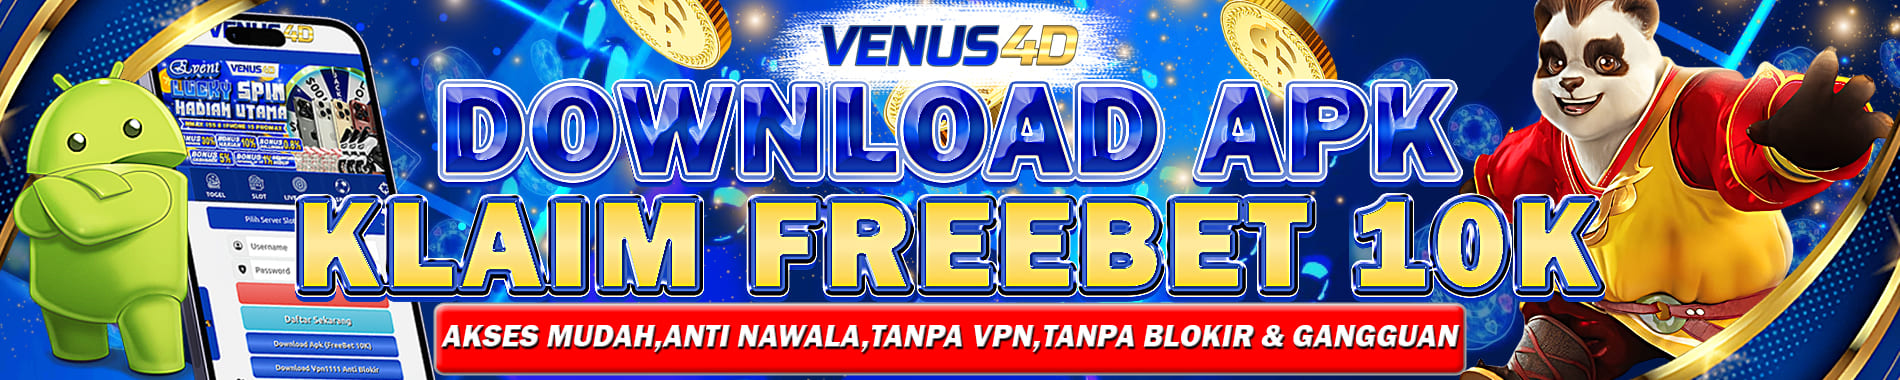 venus4d freebet download apk